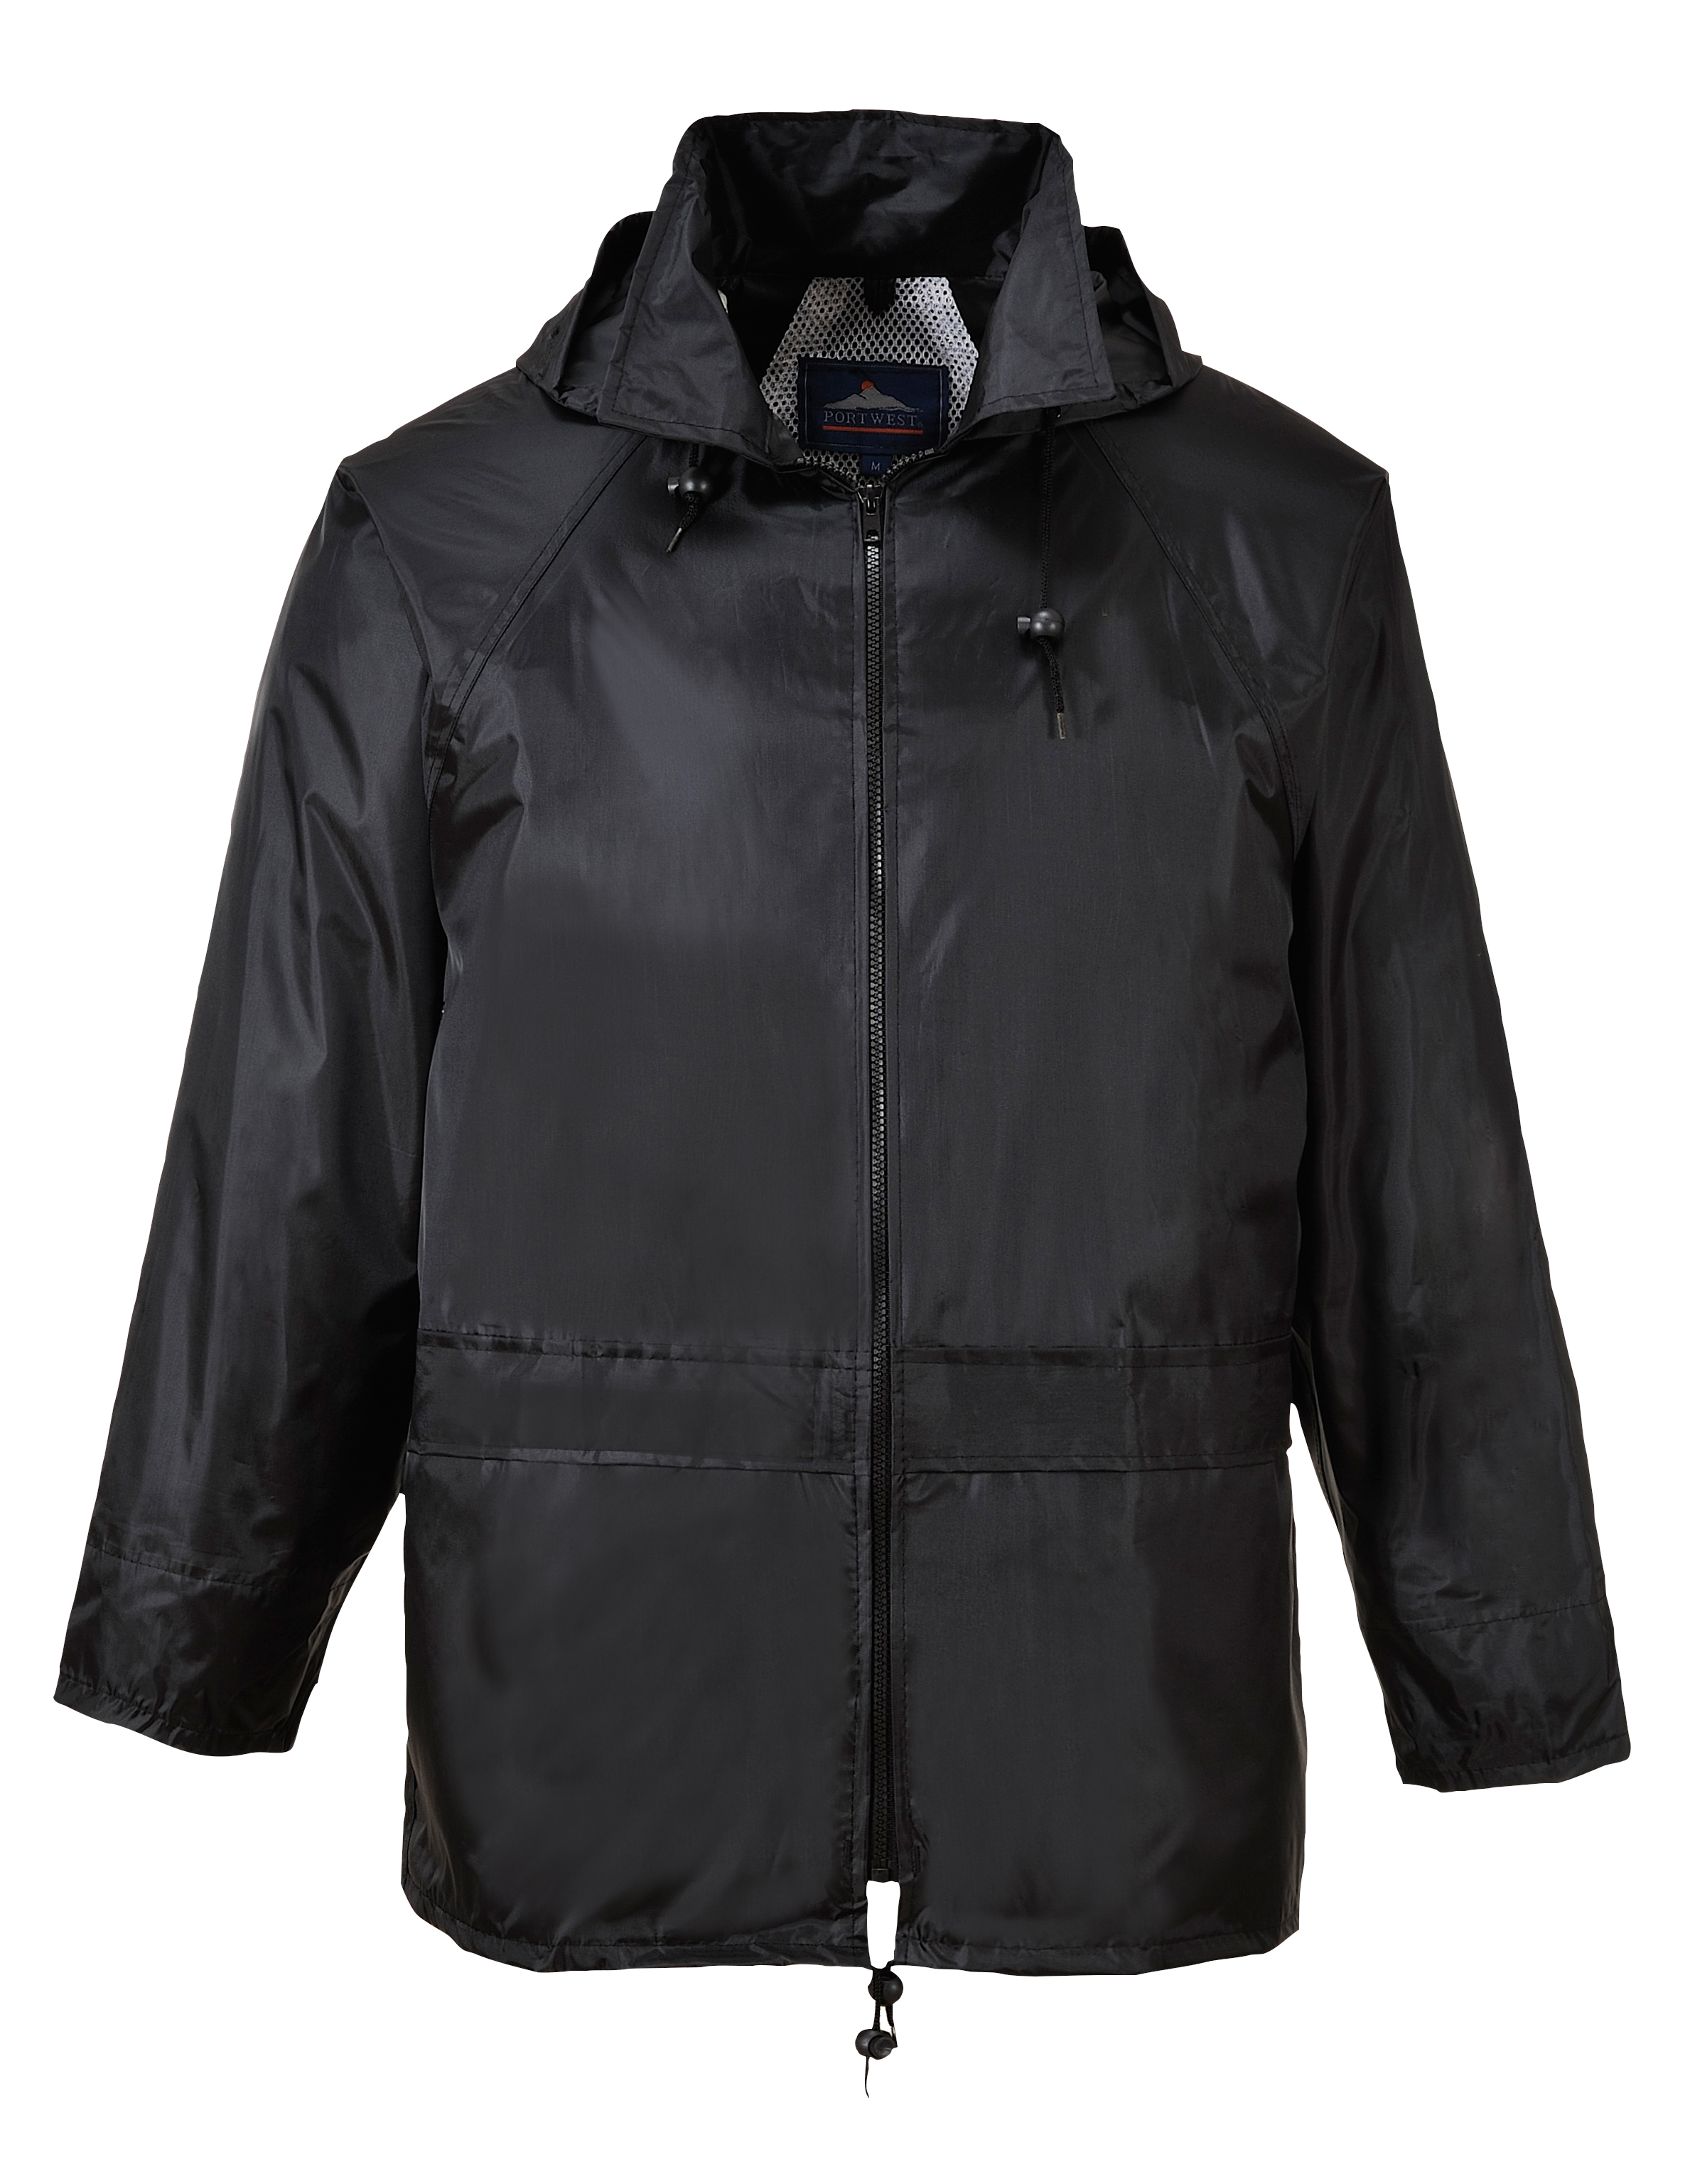 ax-portwest-classic-rain-jacket-black_py1umc4ybcaagnhs.jpeg